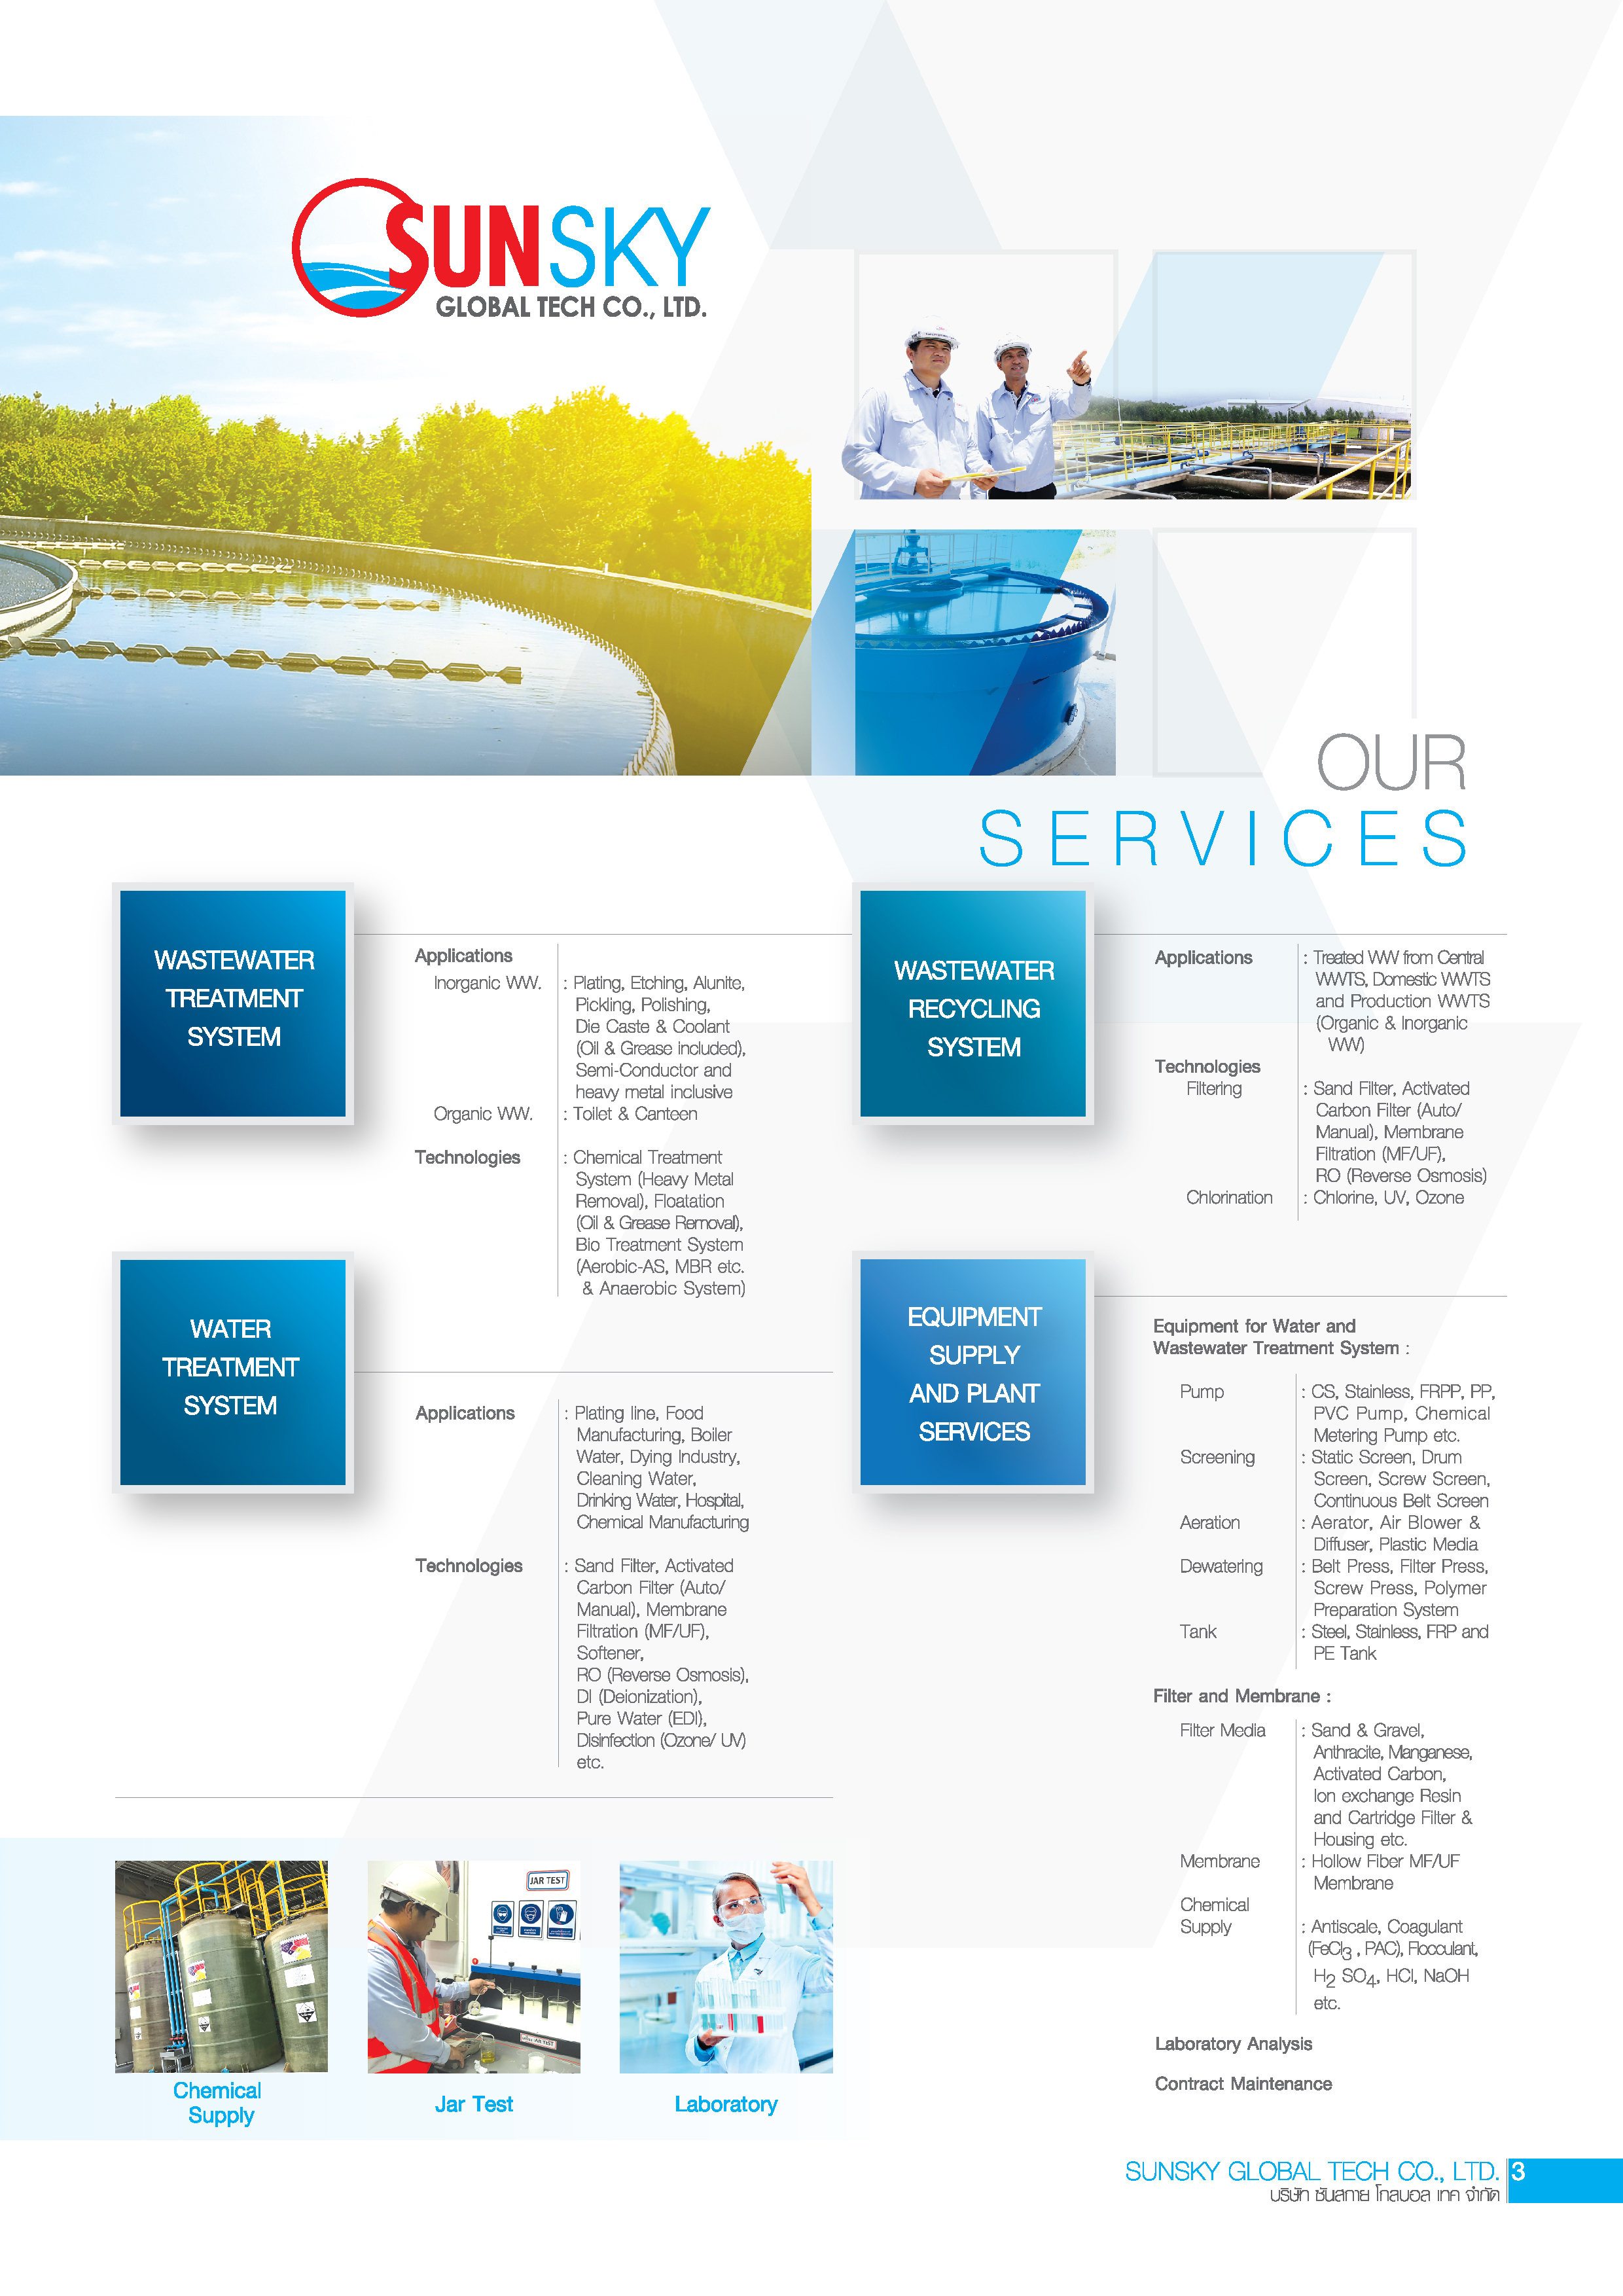 Qualxserv Service Agreement Company Profile Sunsky Global Tech Co Ltd